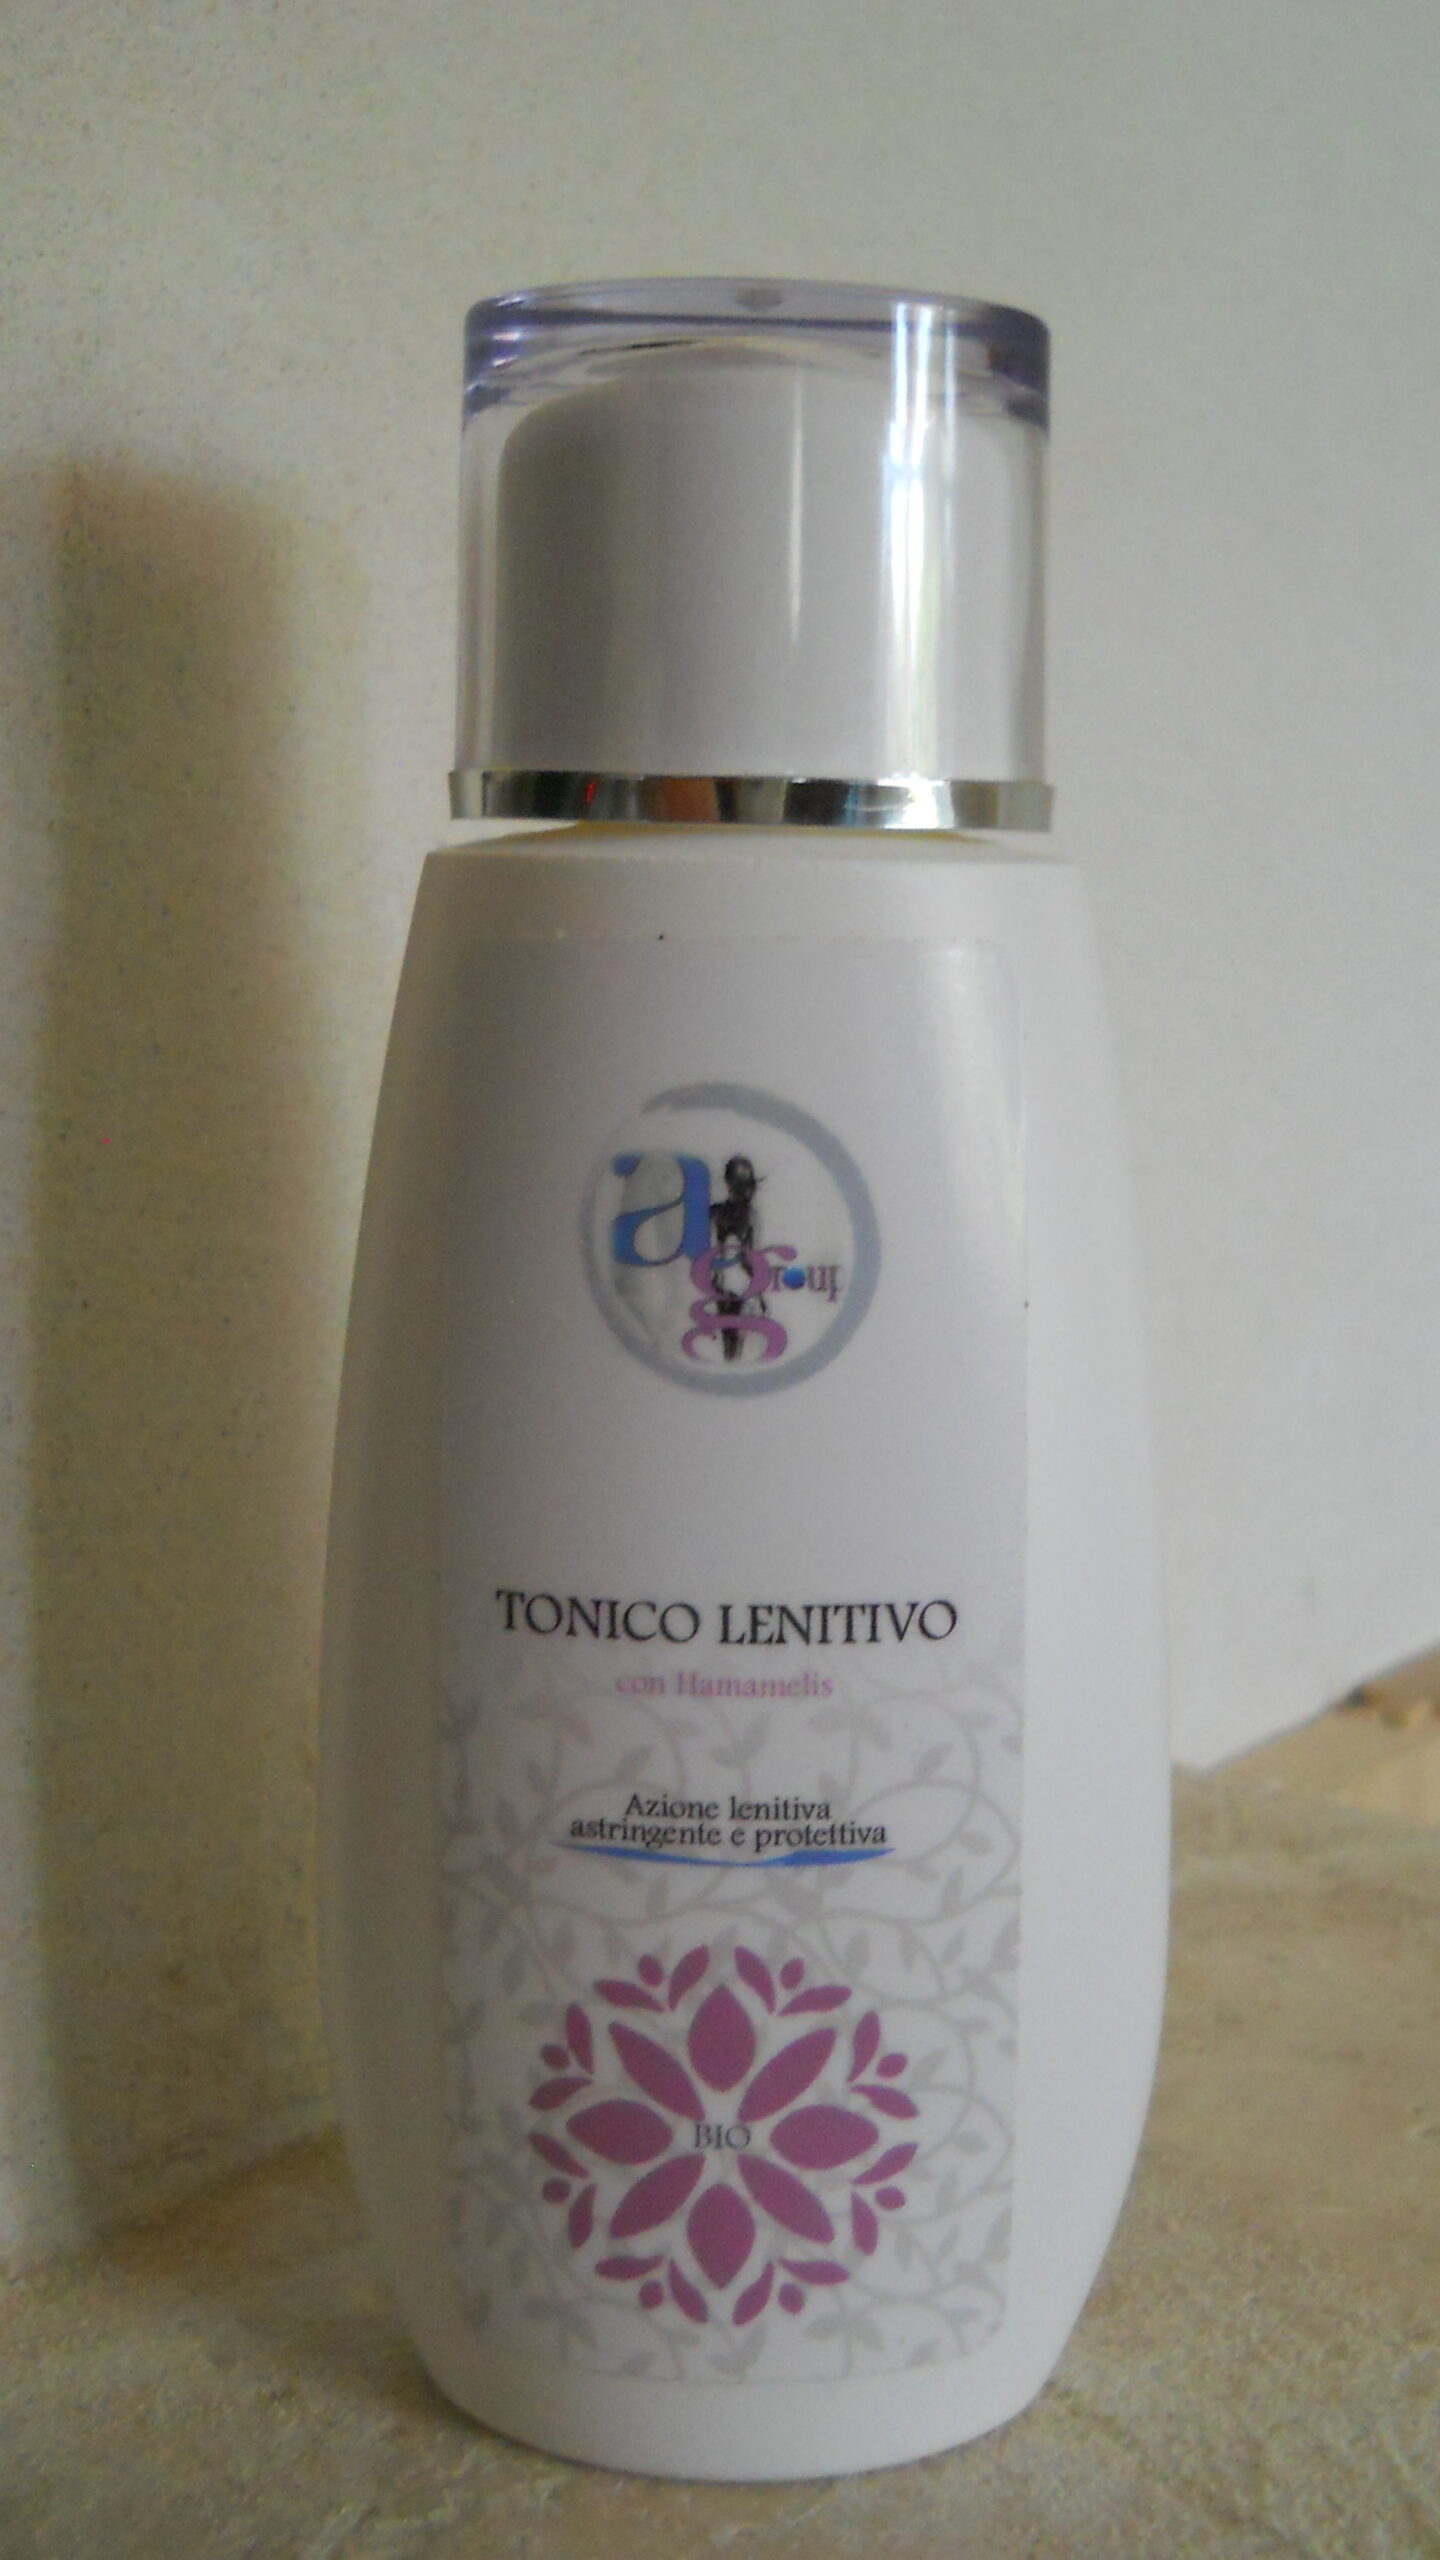 Featured image for “TONICO LENITIVO con Hamamelis - Cosmetica Bio AG Derm”